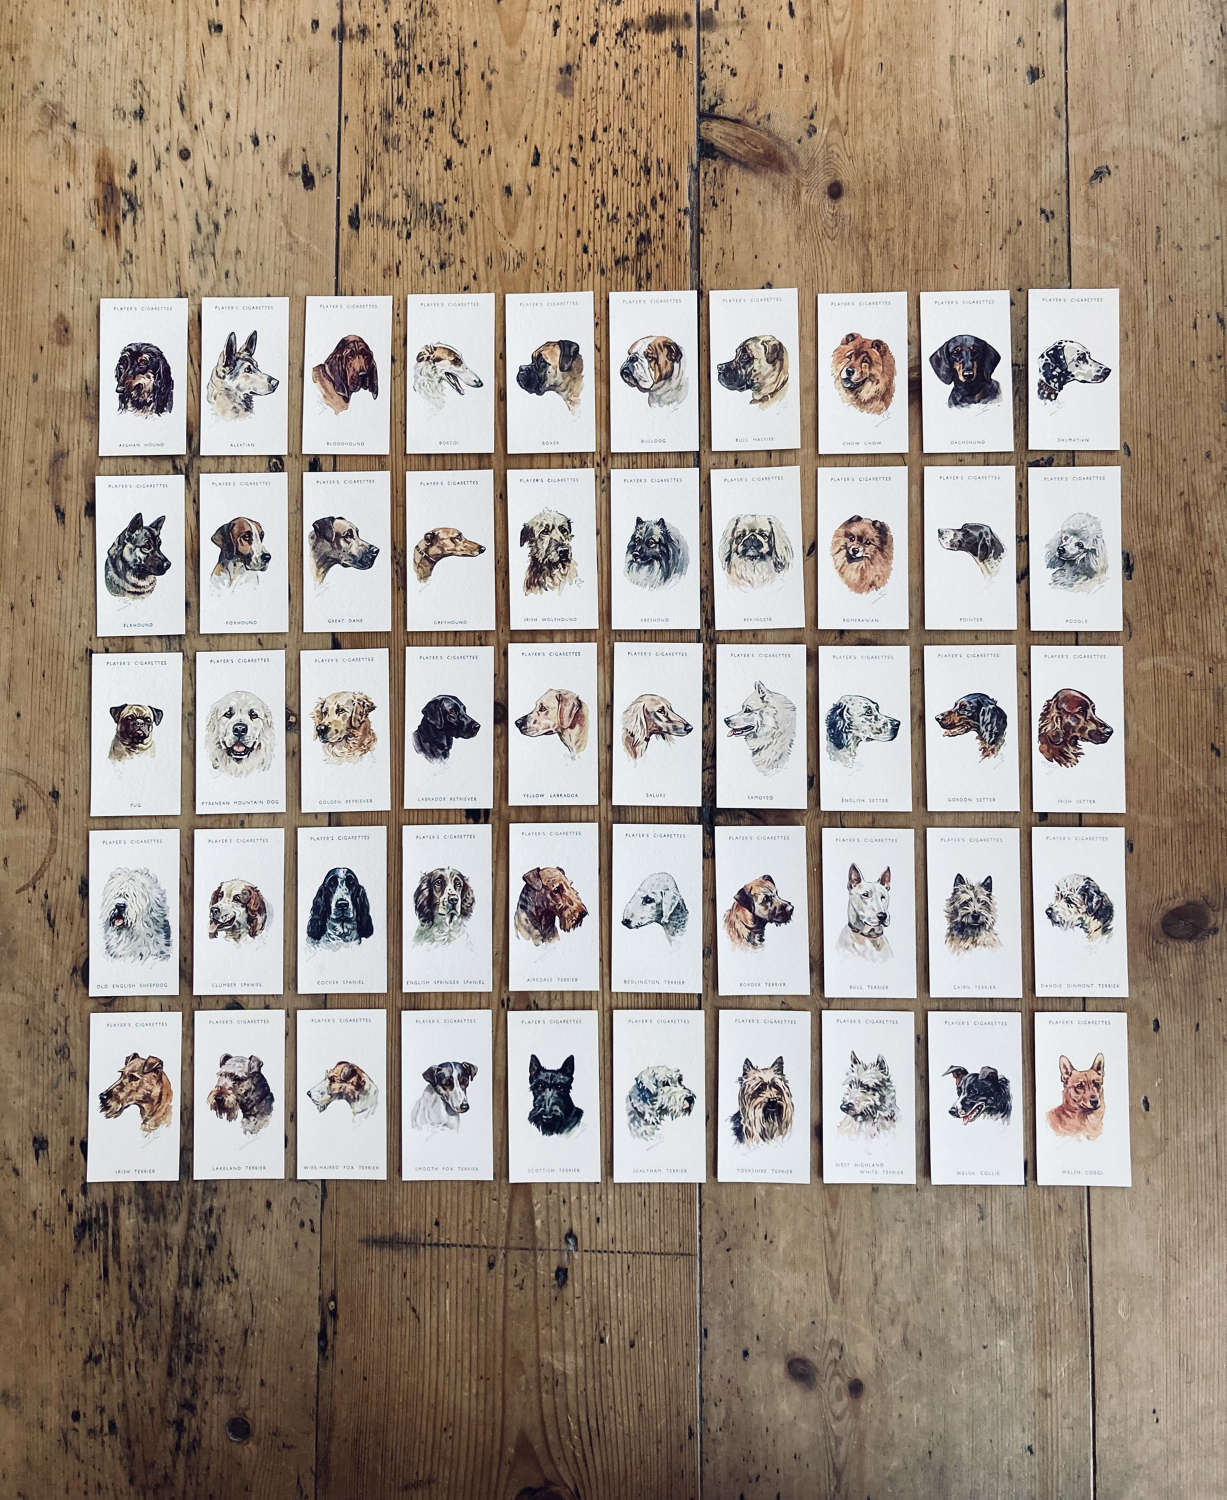 John Player's cigarettes set of 50 dog cards.